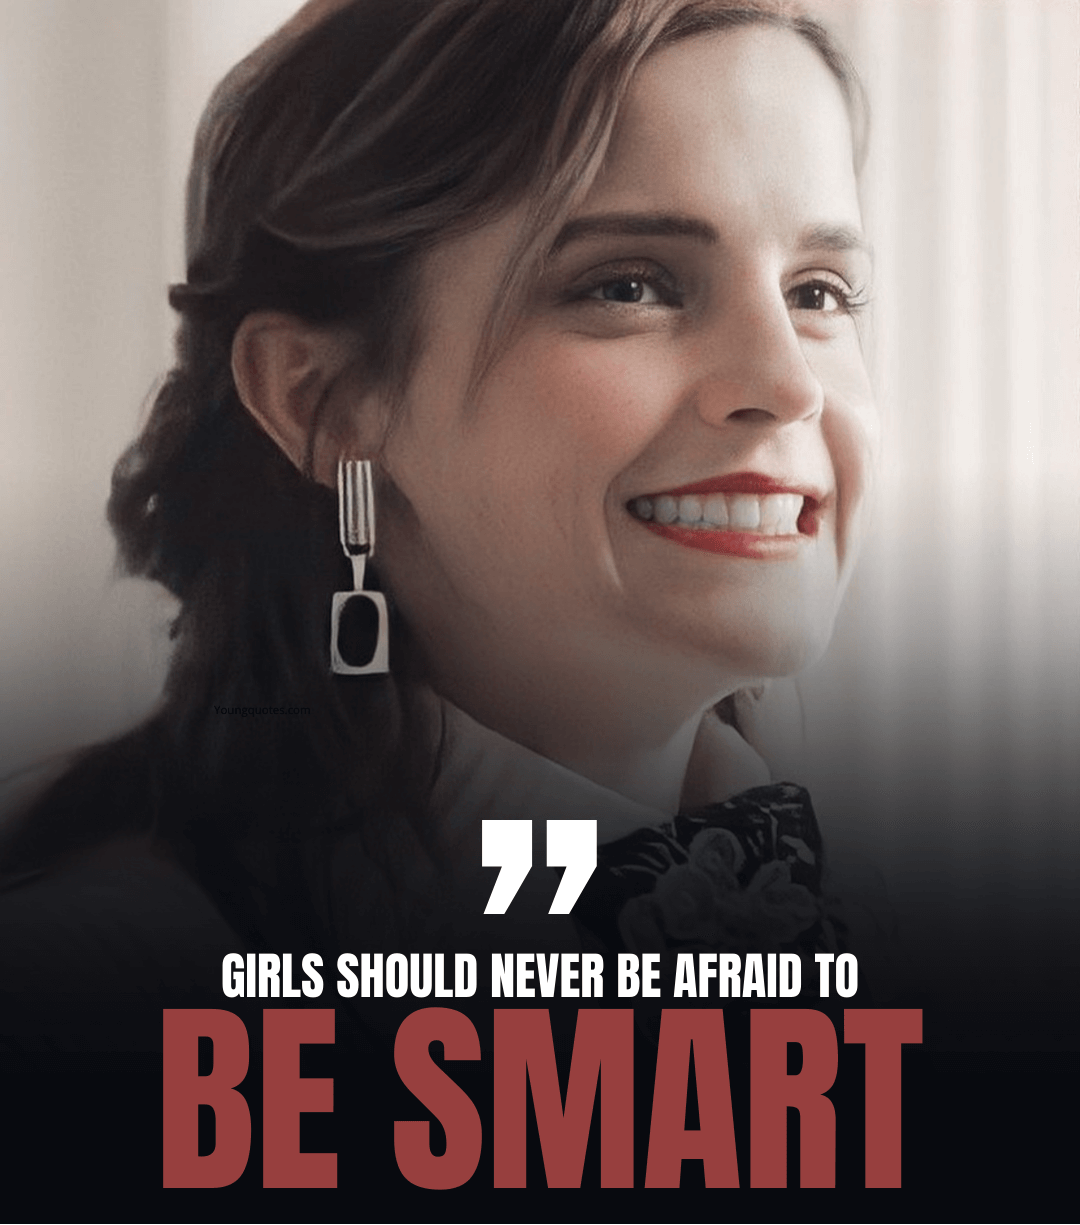 Emma on girls - Girls should never be afraid to be smart.